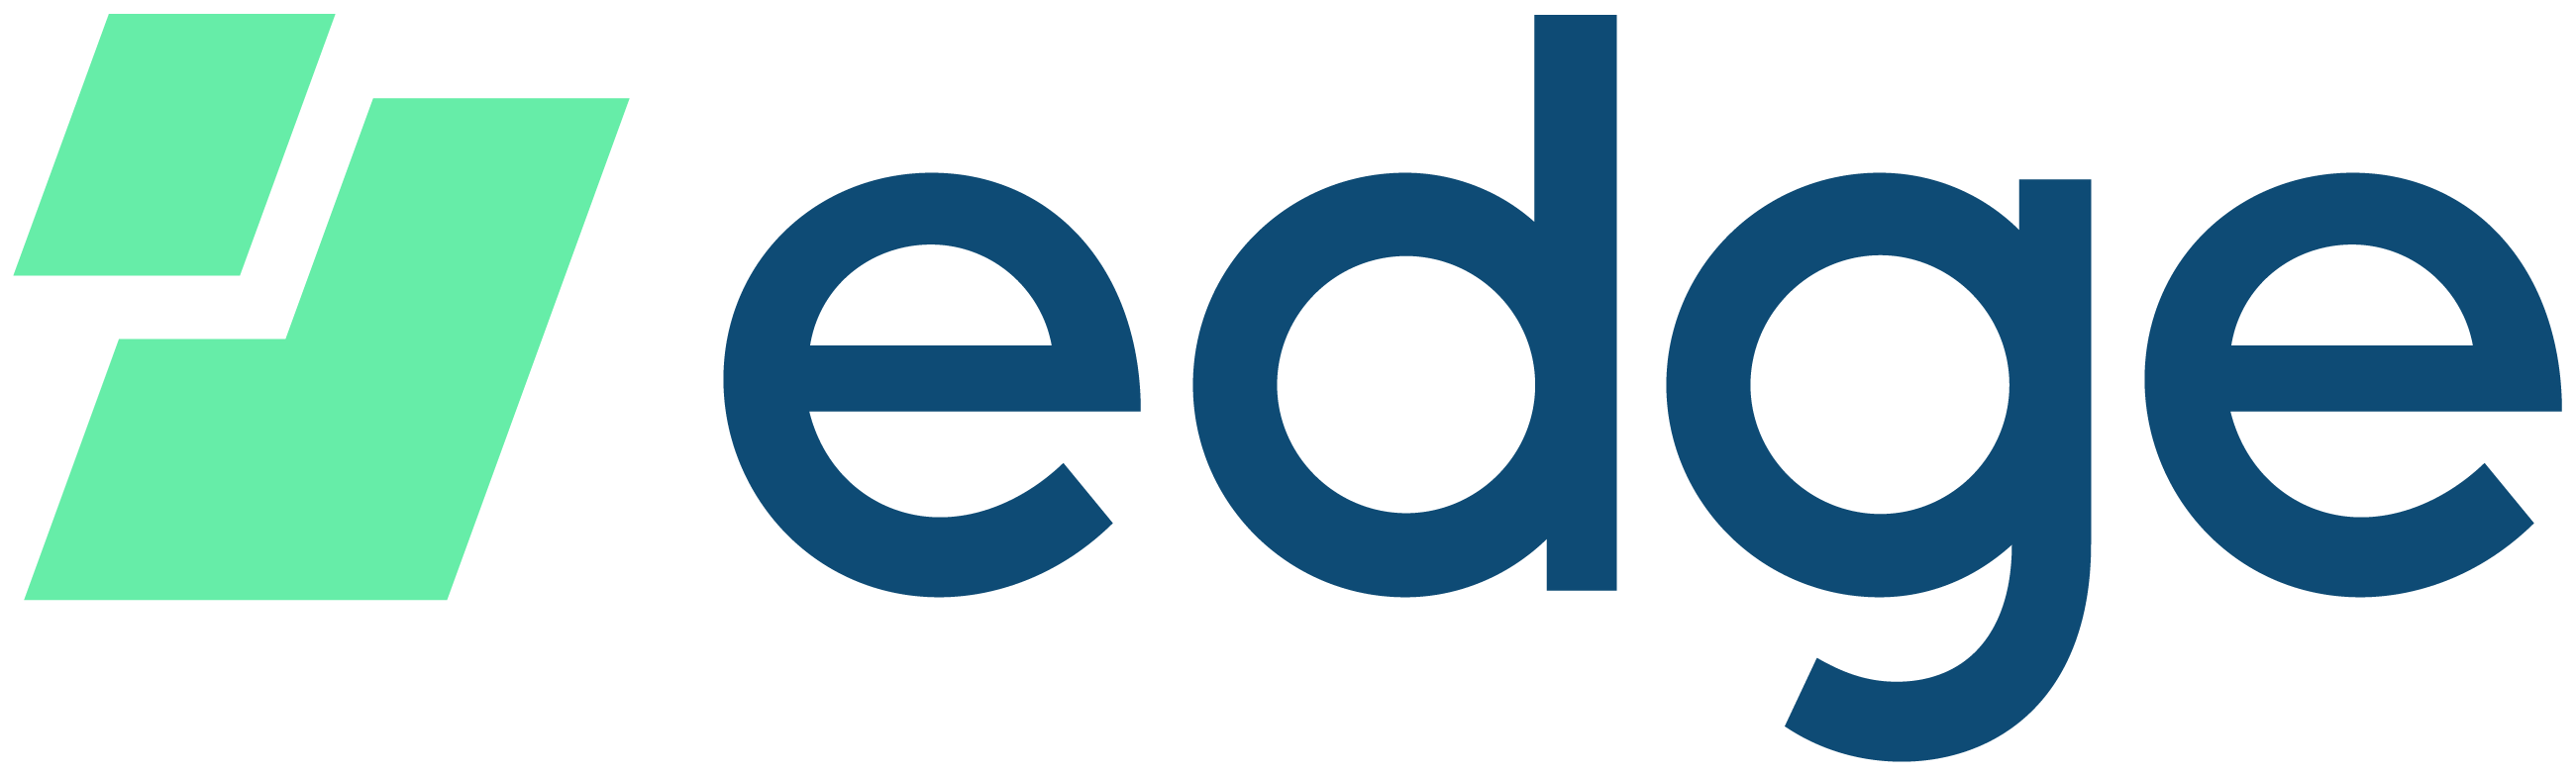 Edge logo colors